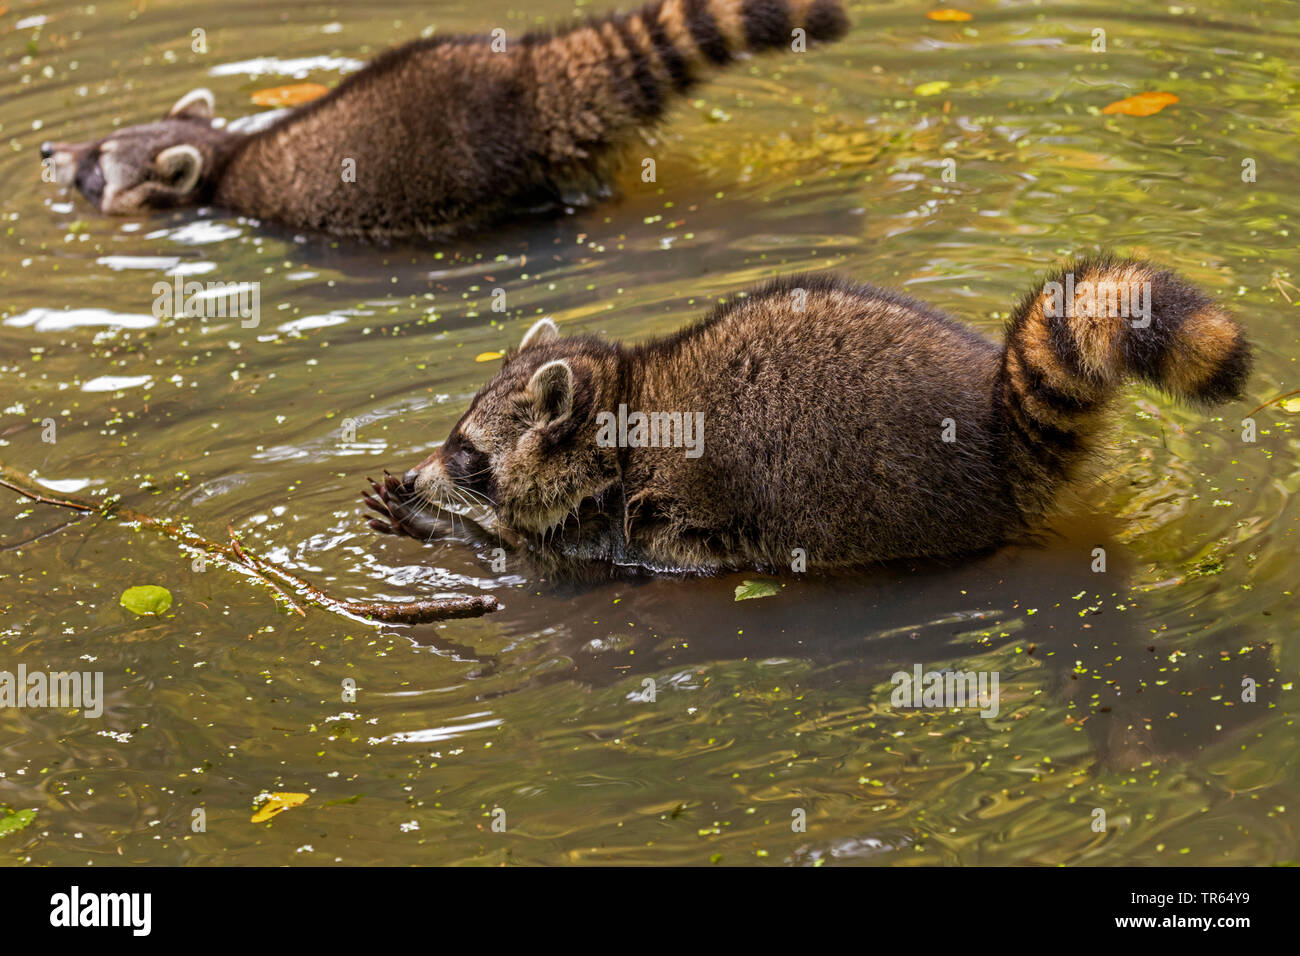 Comunes de mapache (Procyon lotor), en aguas poco profundas, vista lateral, Alemania Baden Wuerttemberg Foto de stock